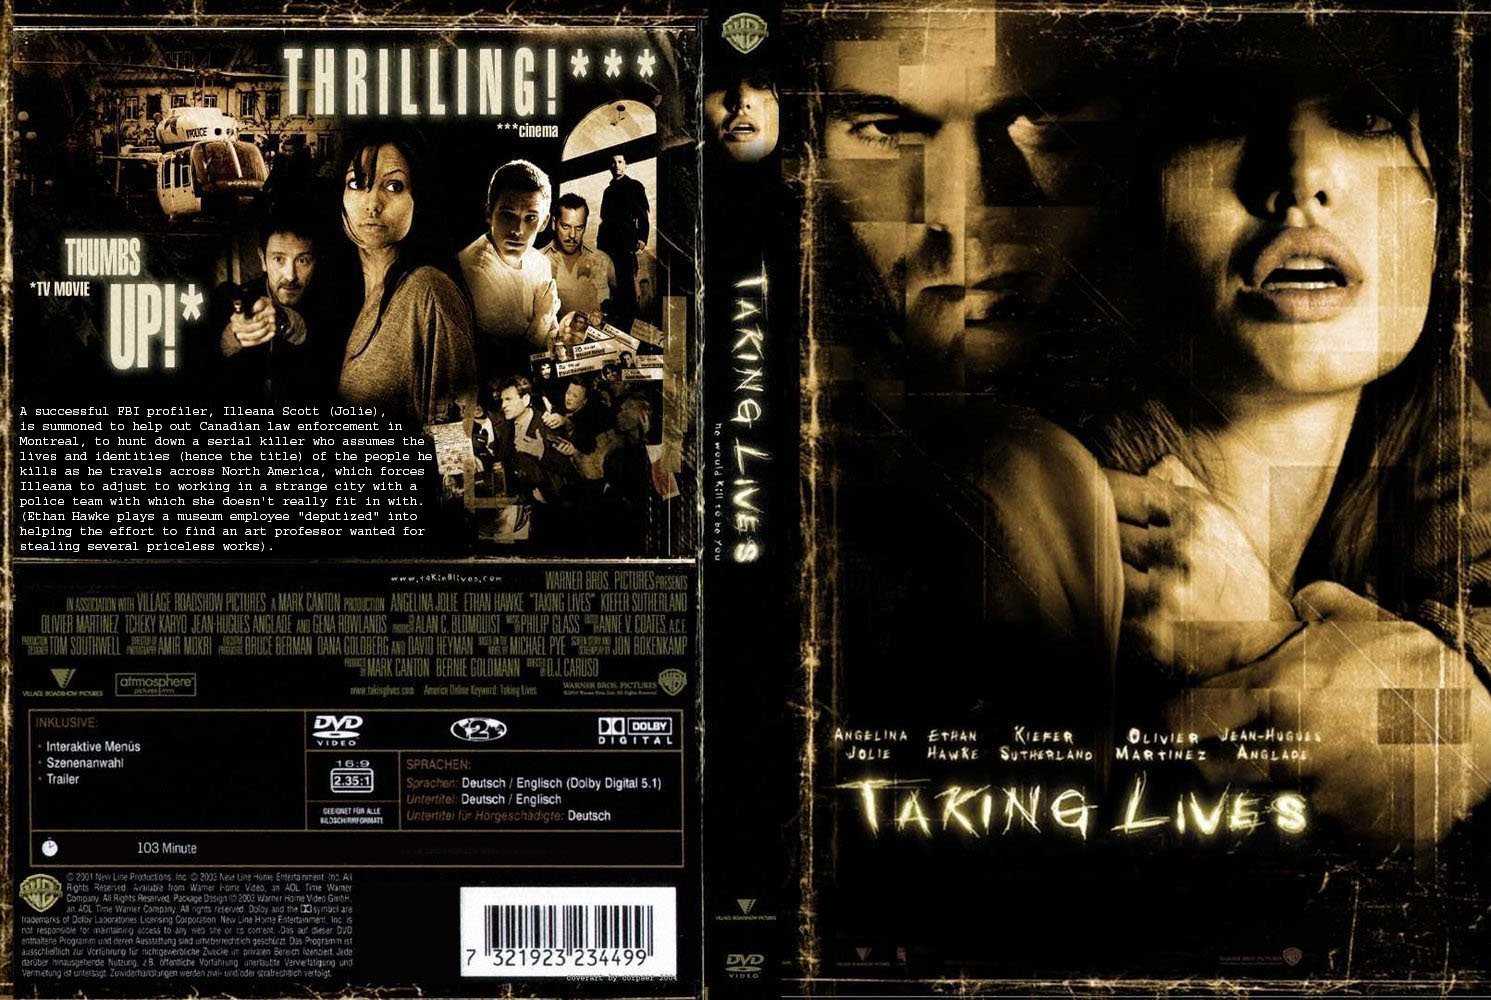 Killer life. DVD Cover. DVD диск Анджелина Джоли. Taking Lives, 2004 DVD Cover.